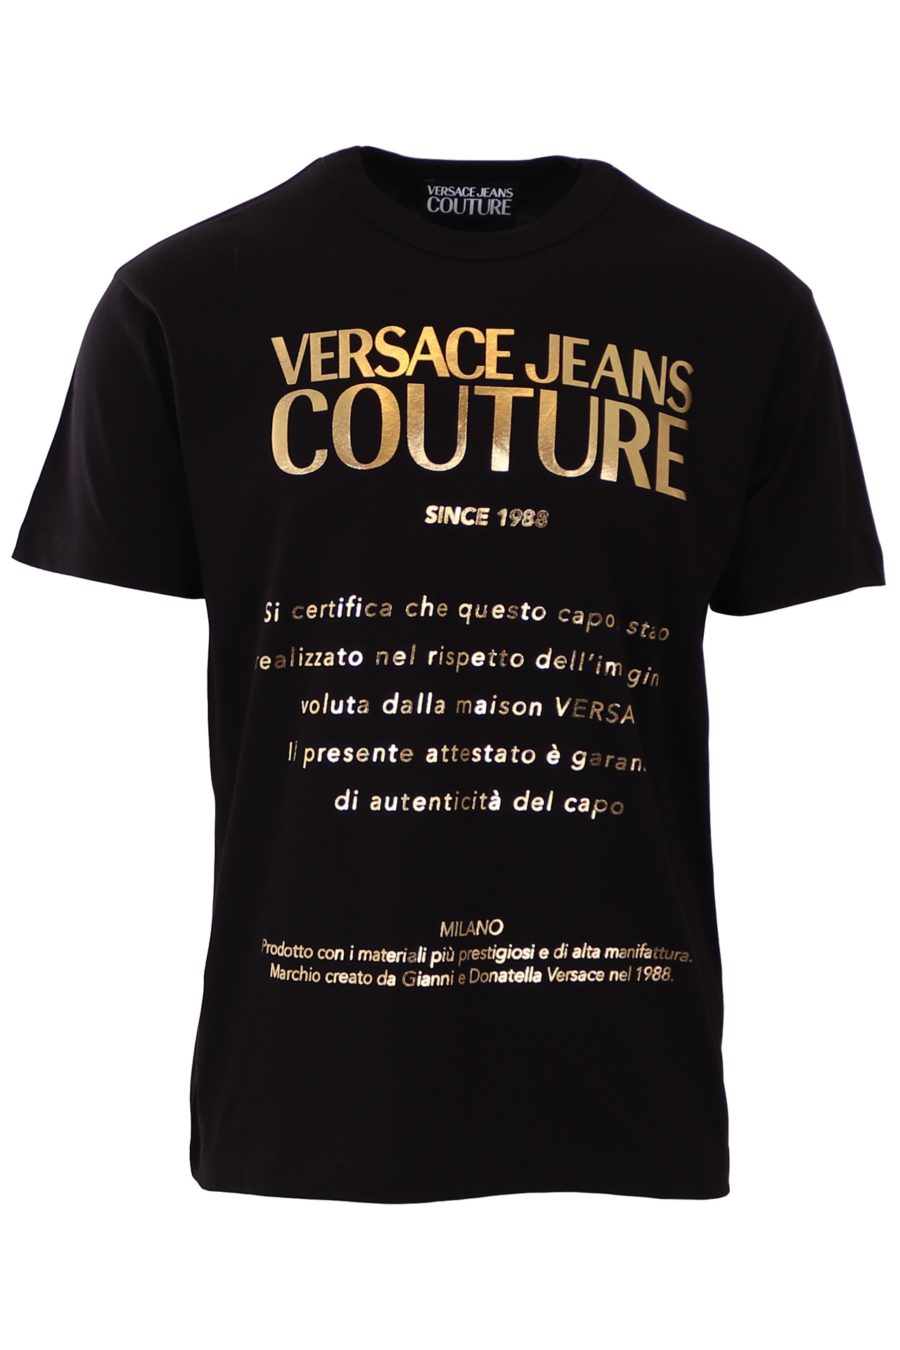 Camiseta regular Versace Jeans Couture negra con escrito dorado - 9fa1c30787e7a787a7ce5cbea778e92f4679604e